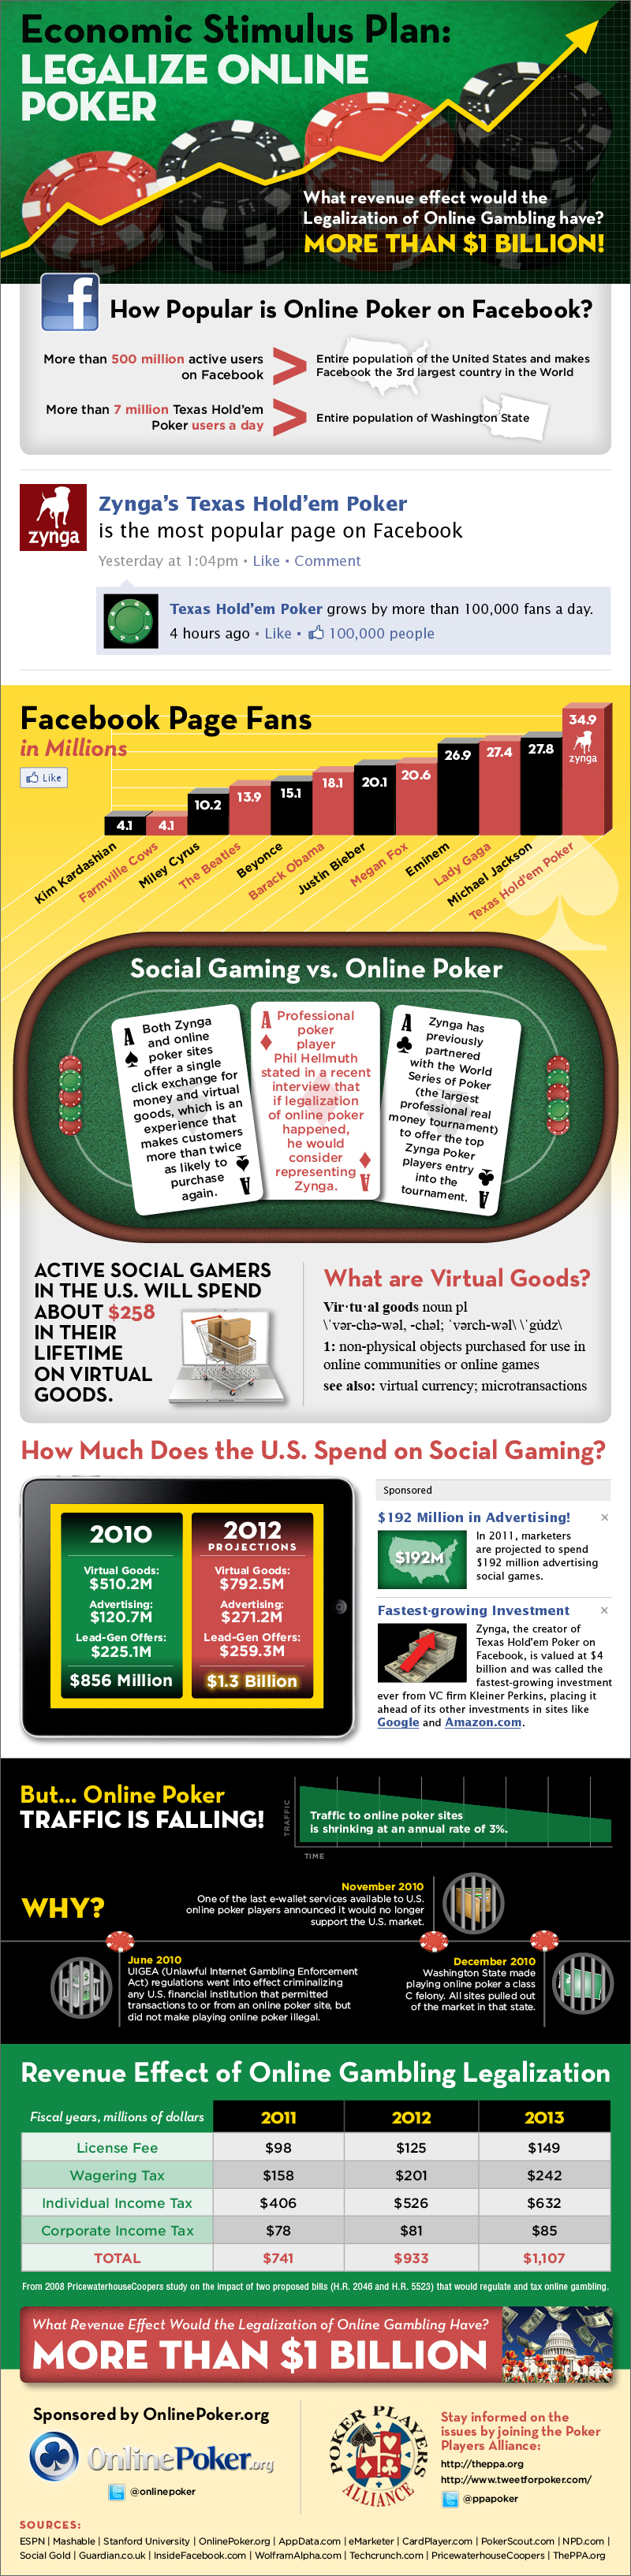 Economic Stimulus Plan: Legalize Online Gambling [Infographic]